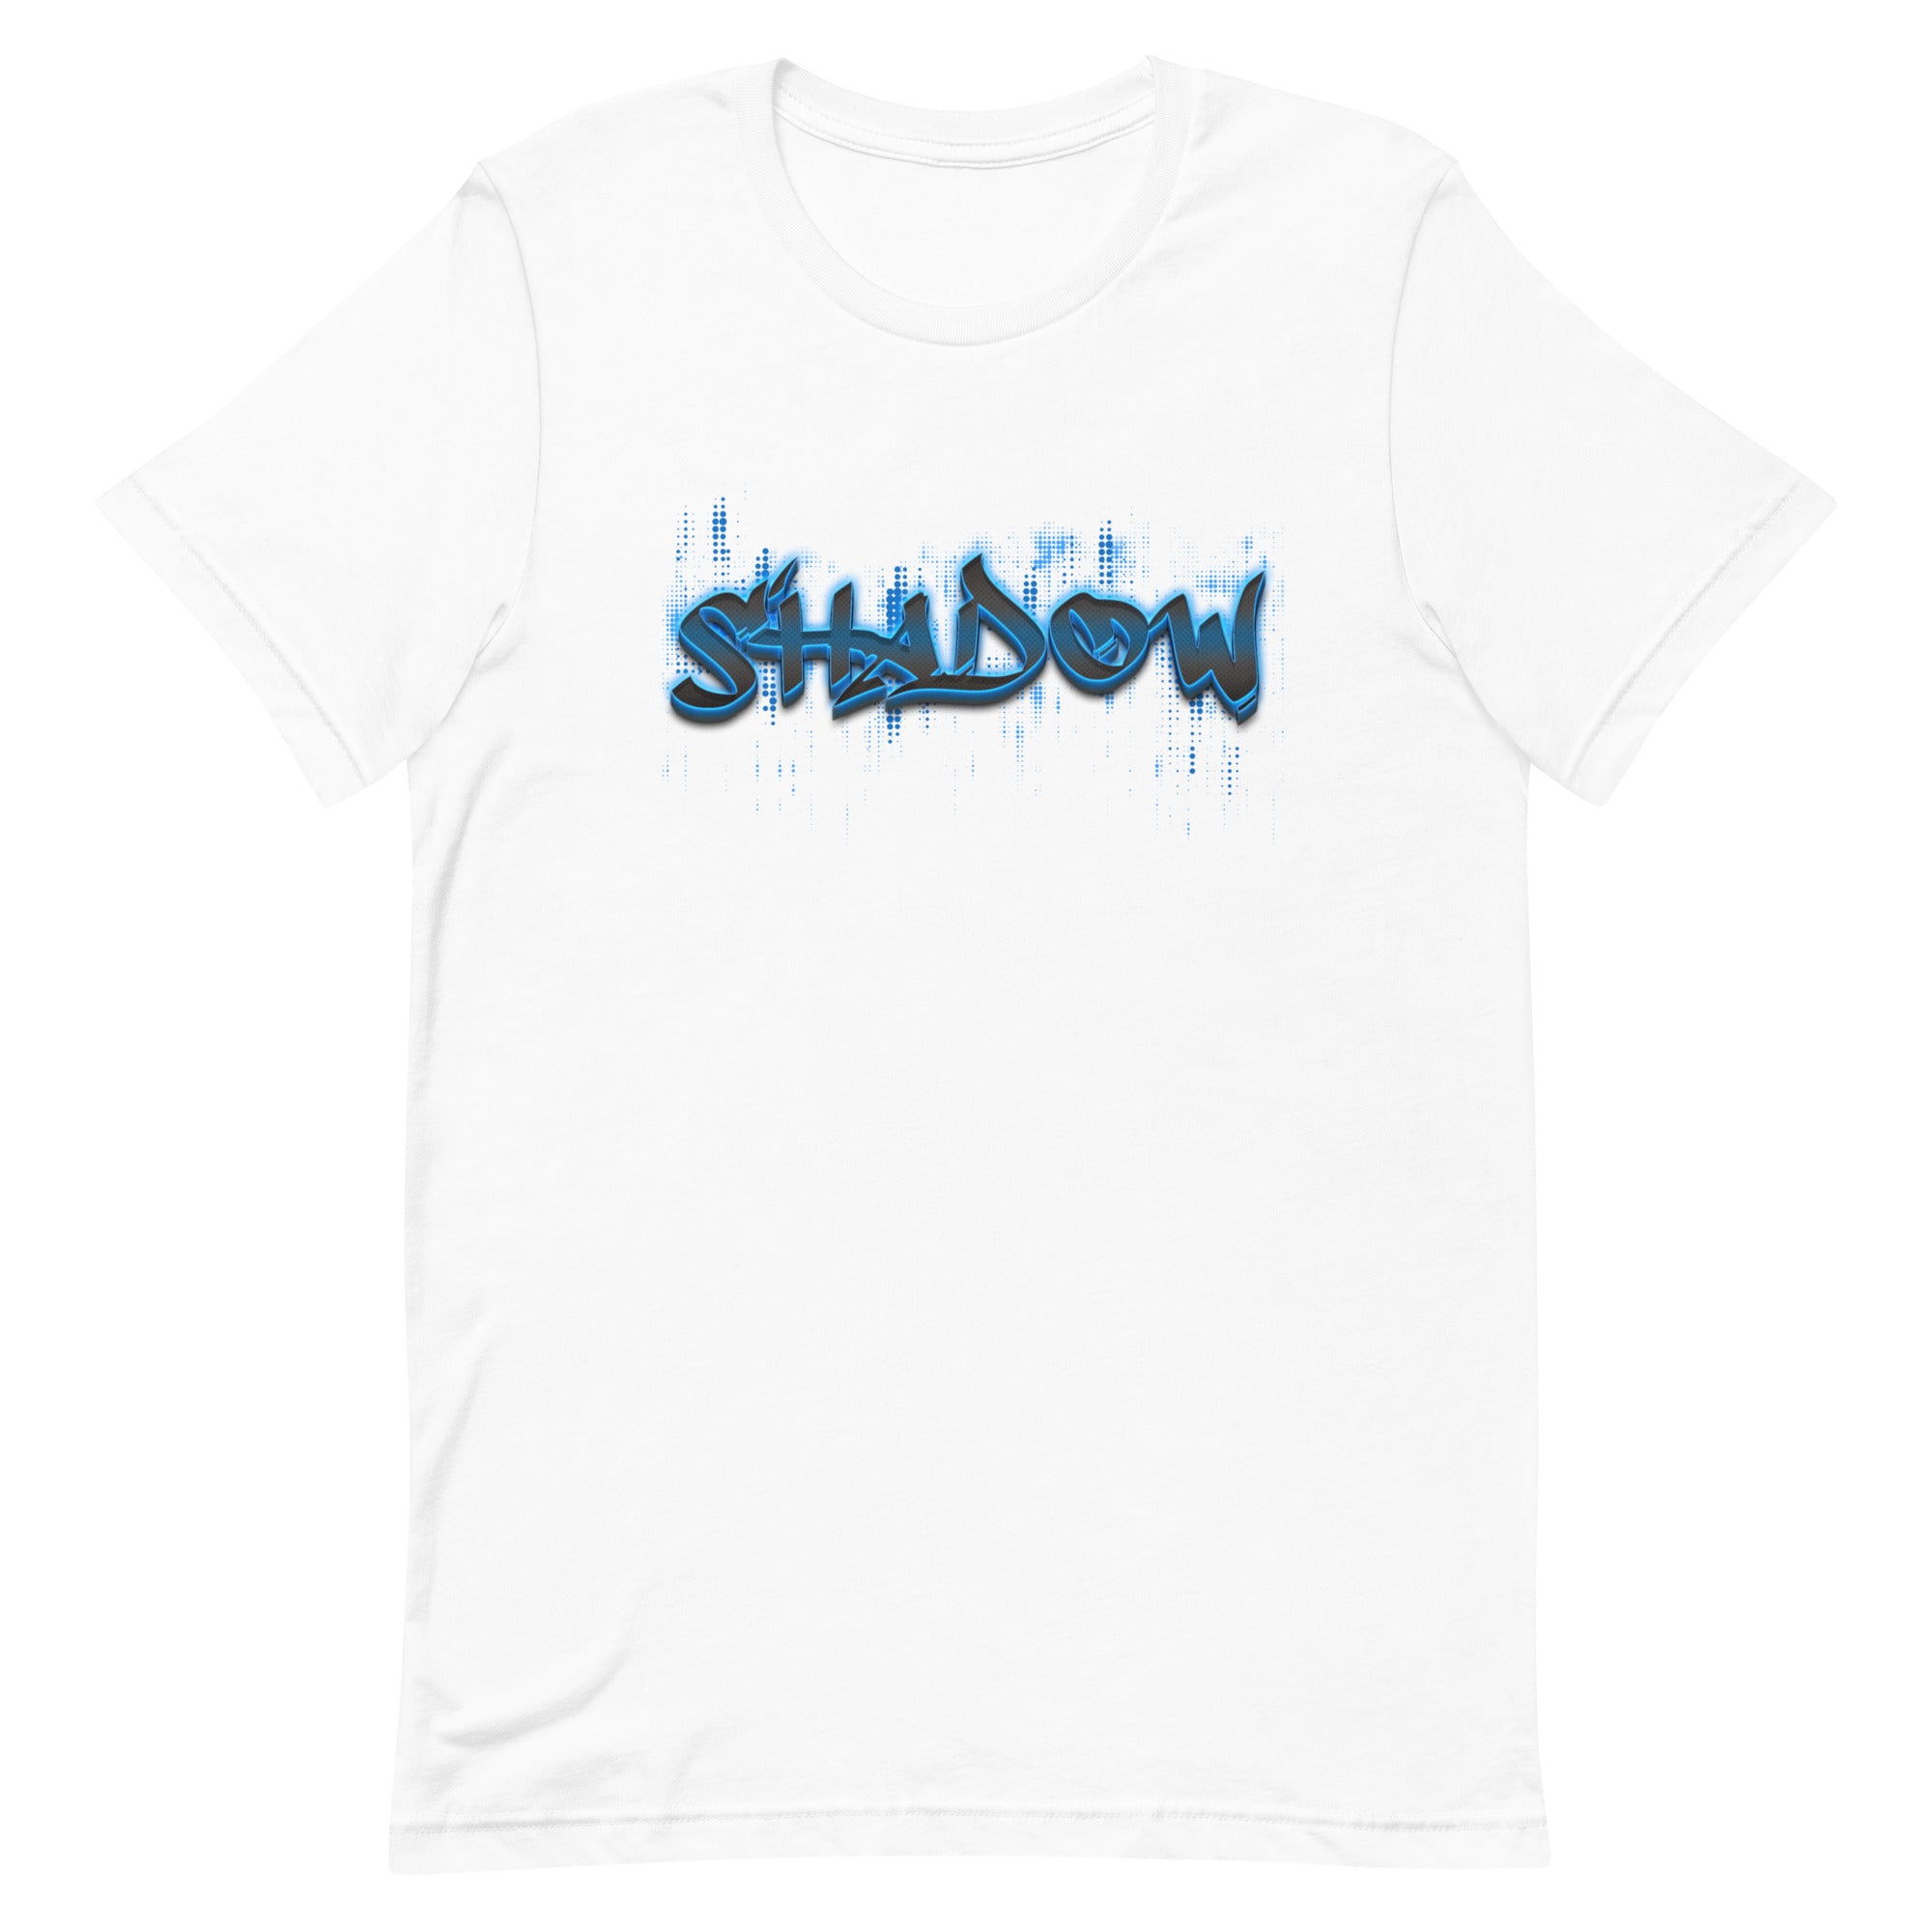 Shadow - Unisex t-shirt